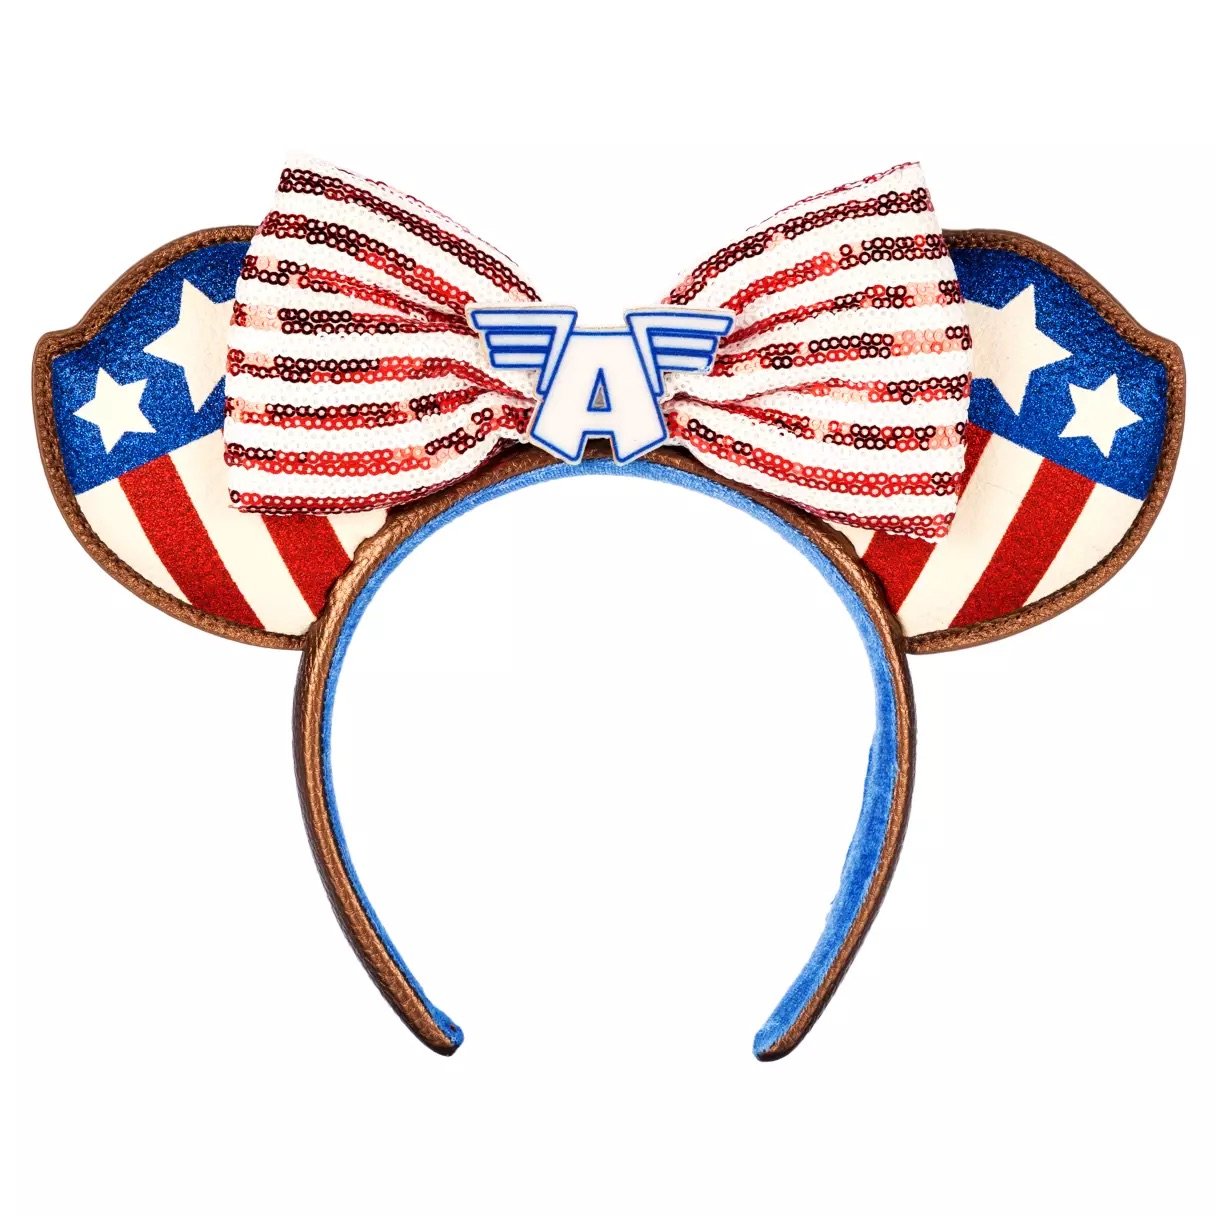 Captain America Ear Headband